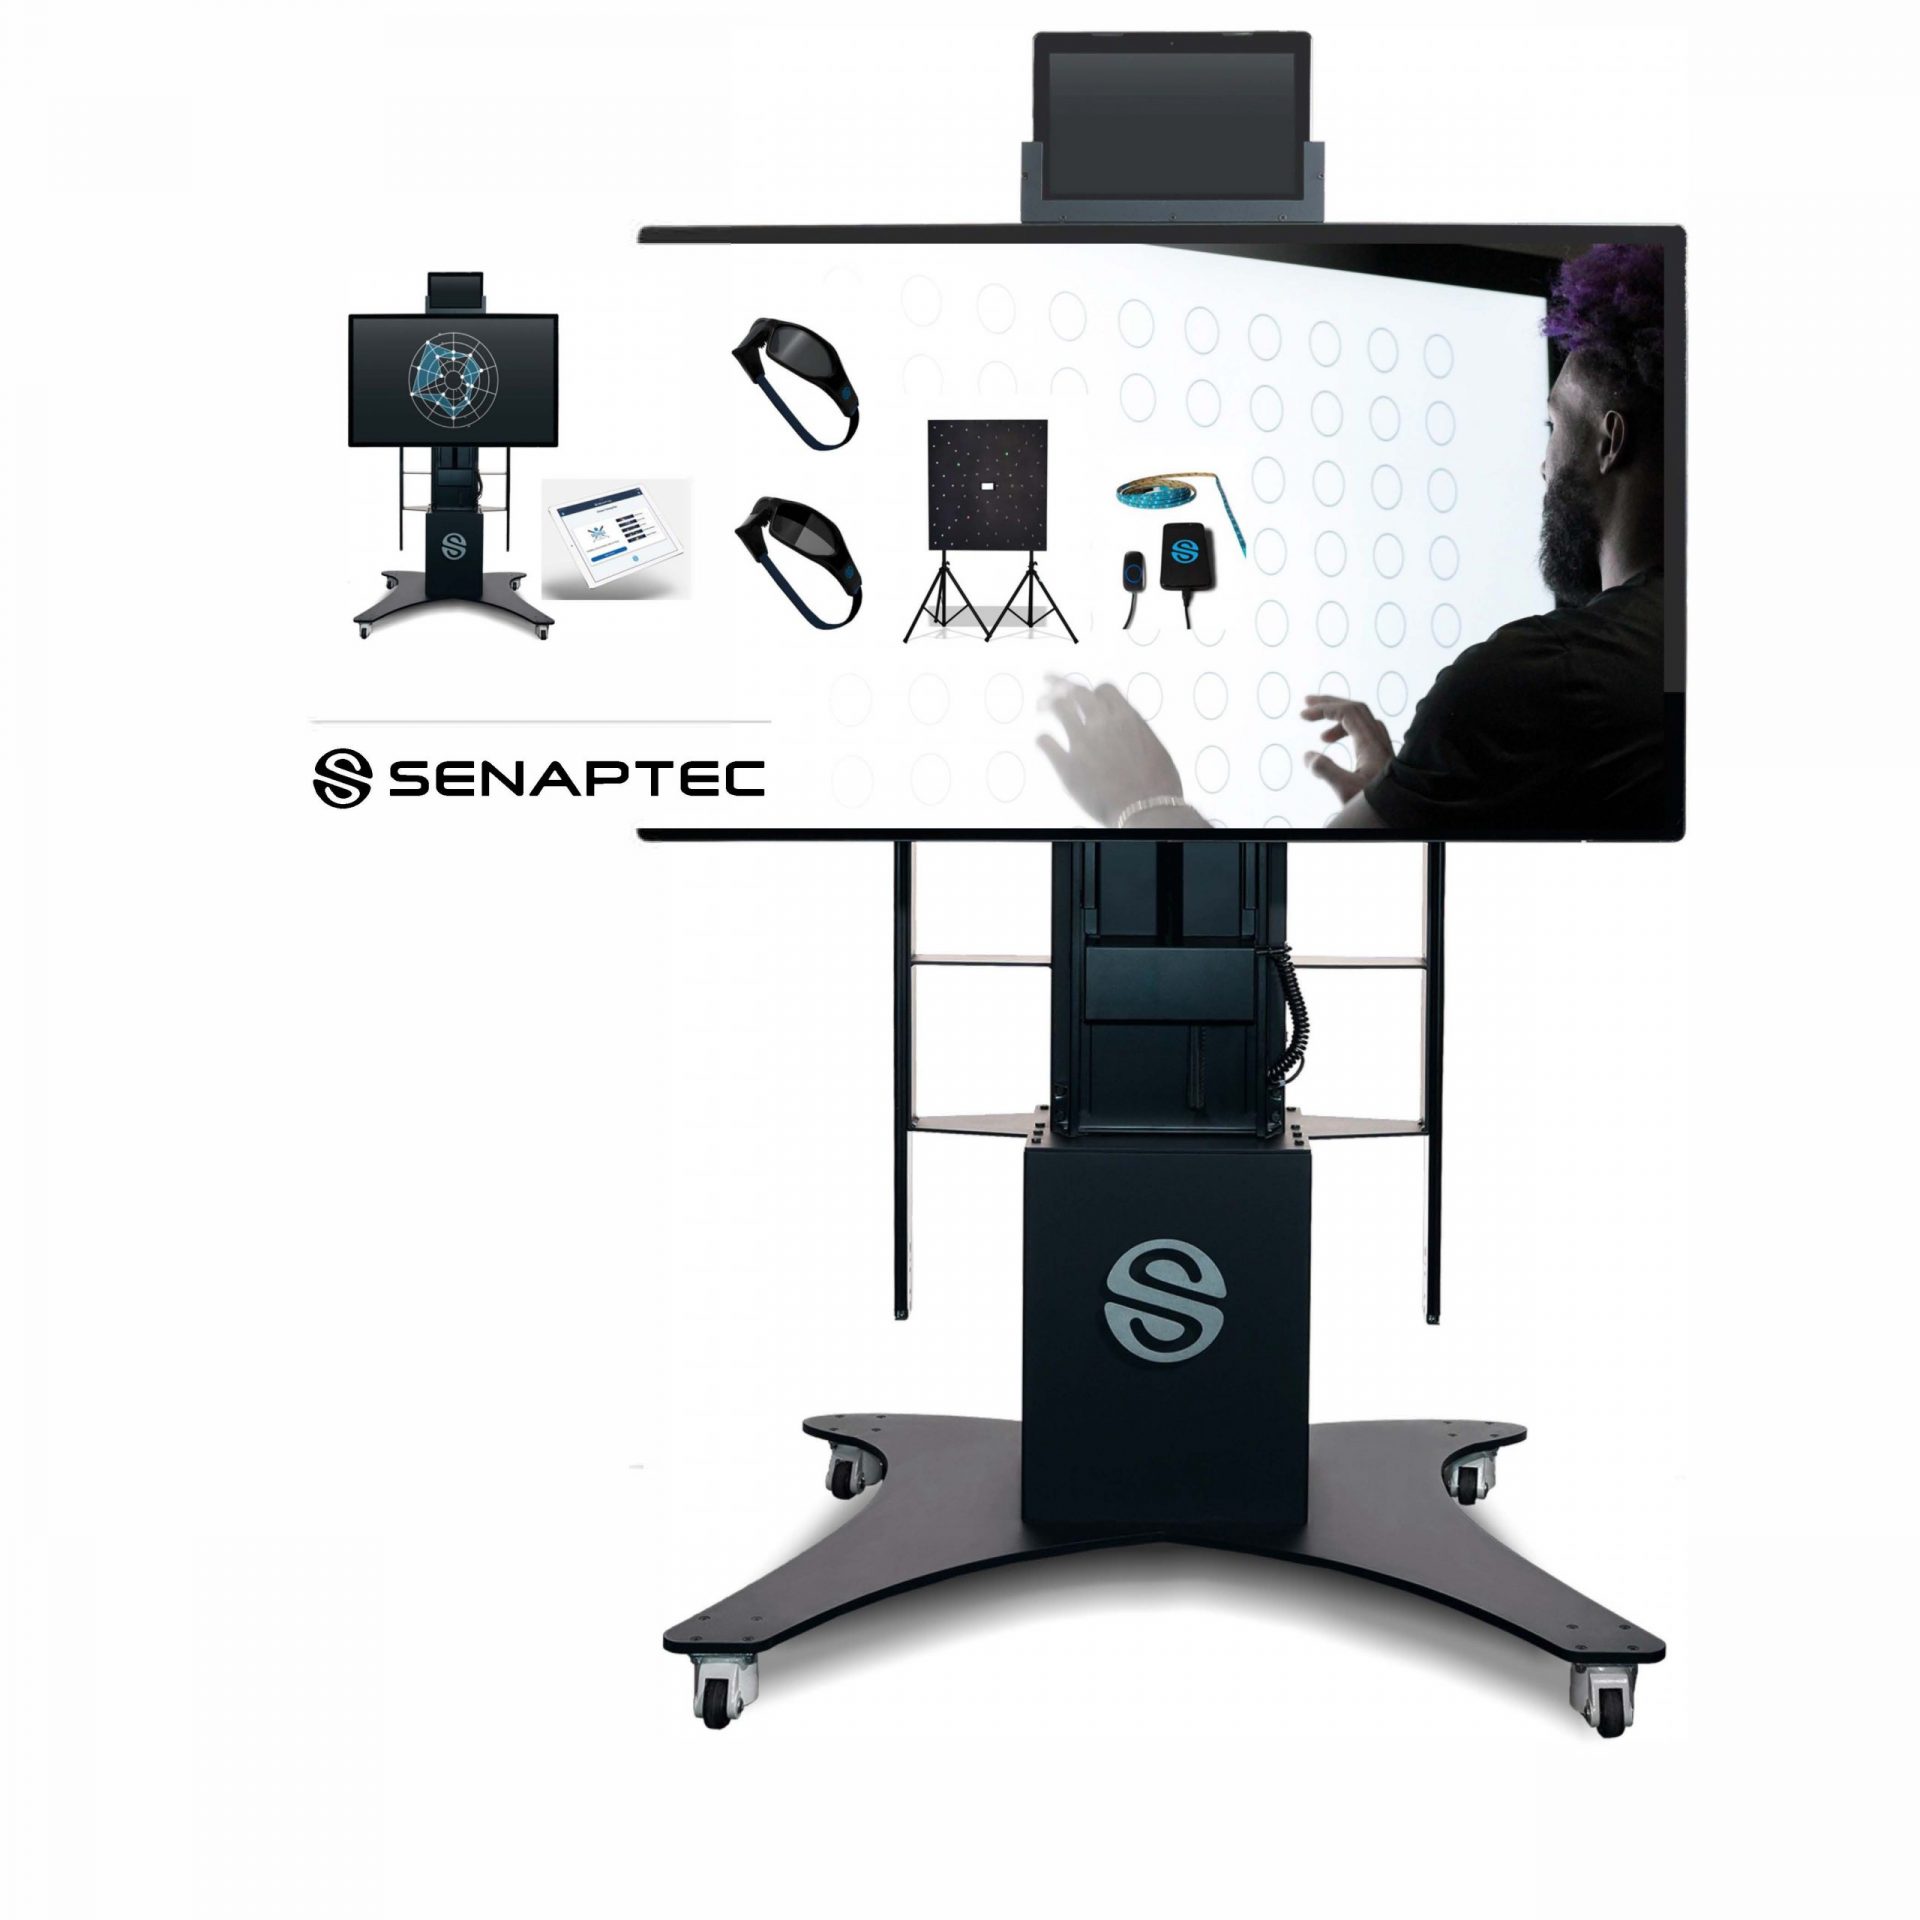 Senaptec Technologies